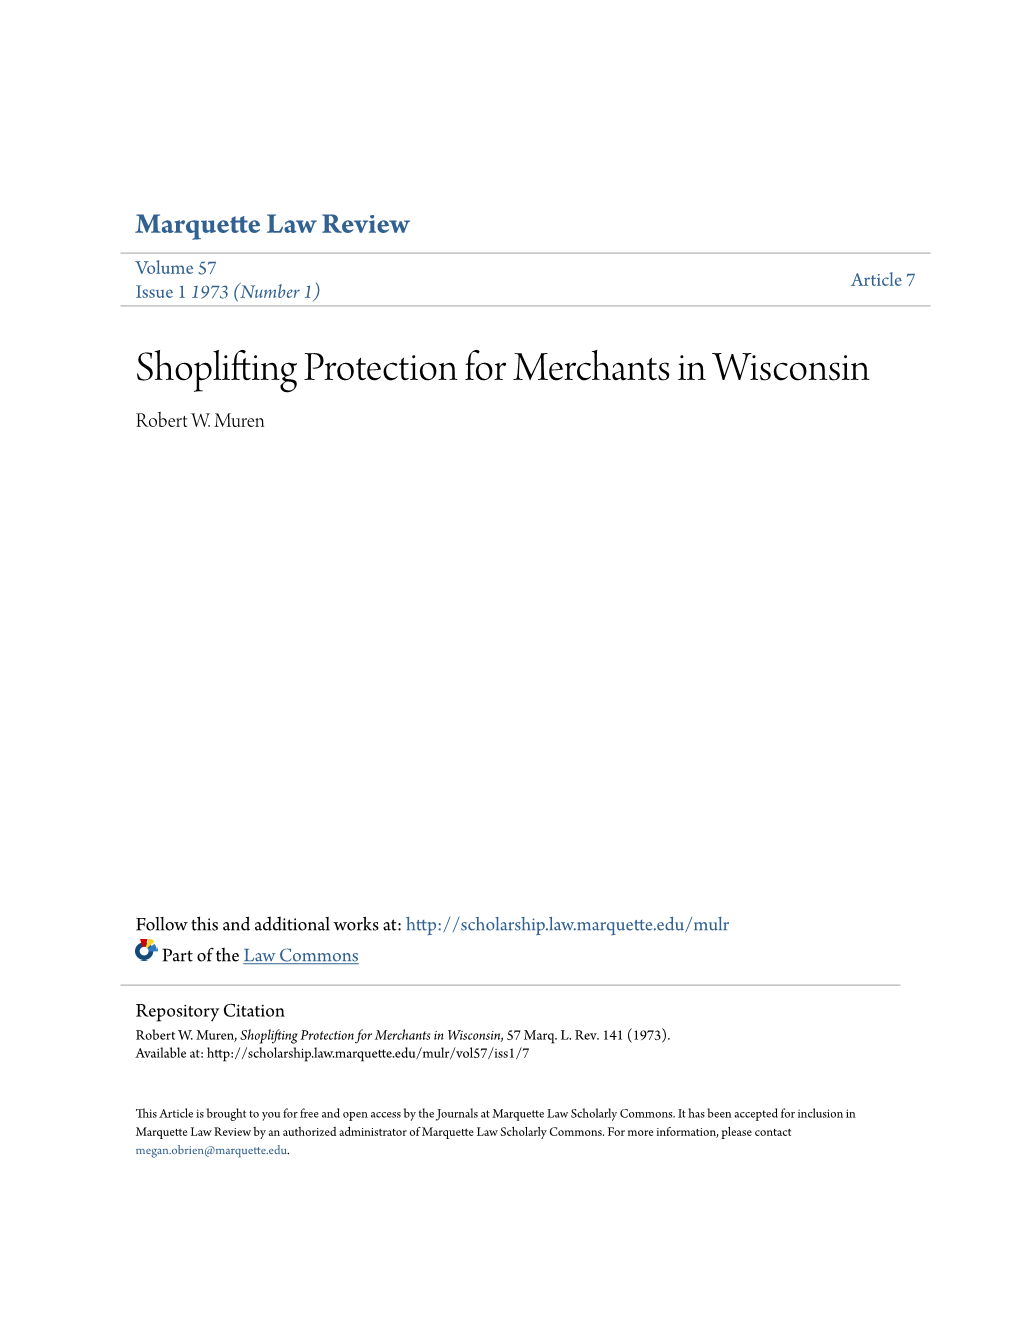 Shoplifting Protection for Merchants in Wisconsin Robert W